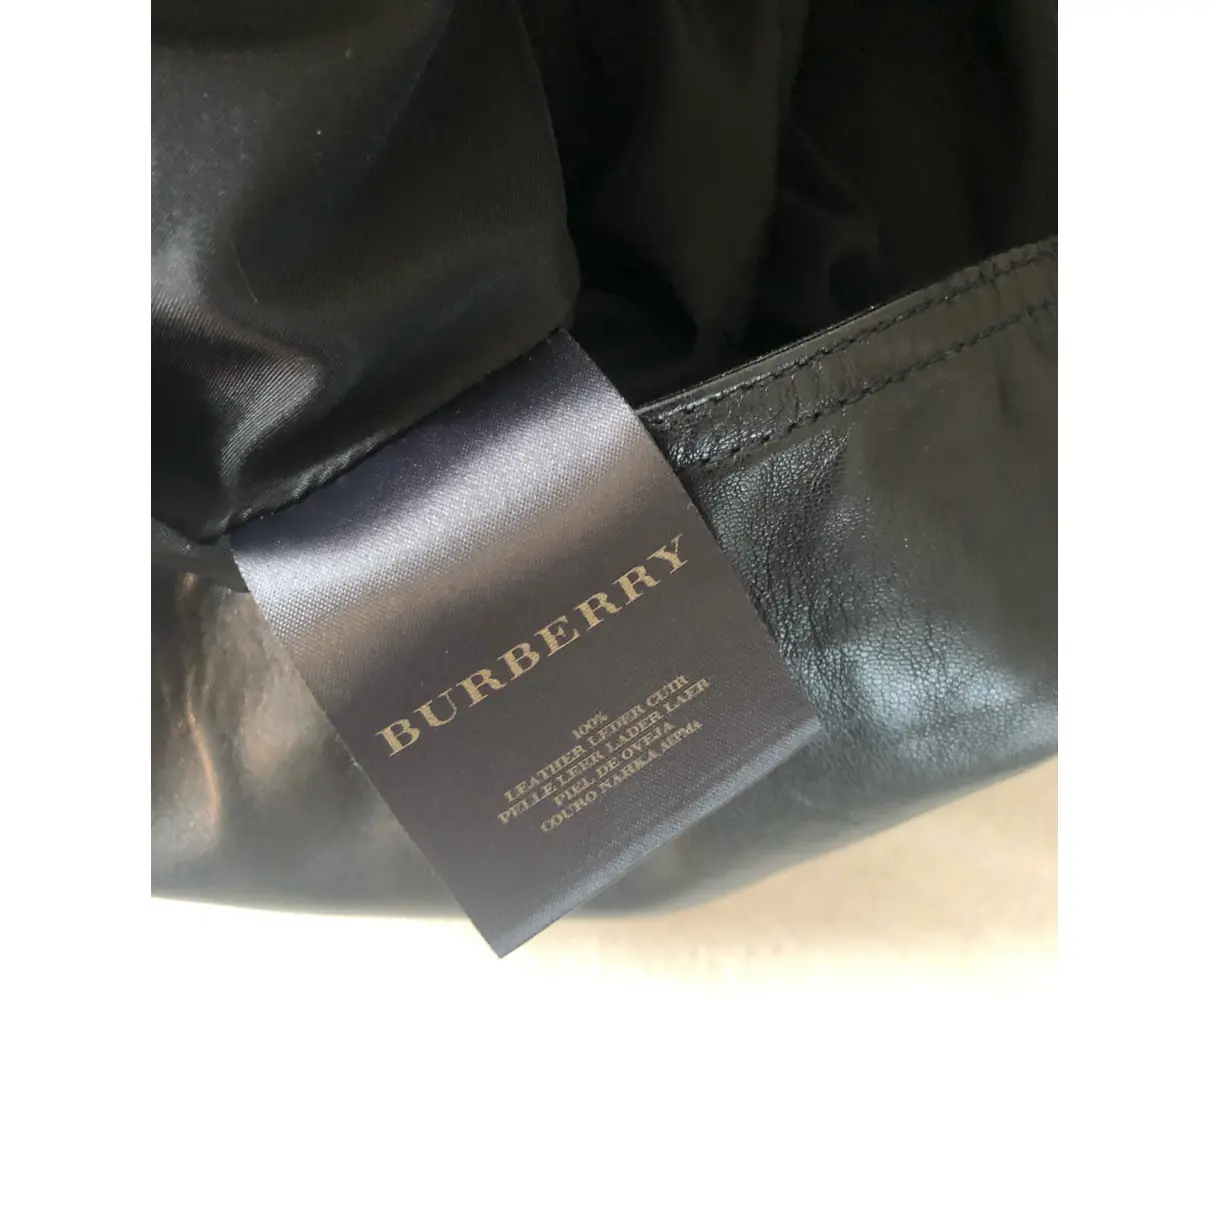 Luxury Burberry Leather jackets Women